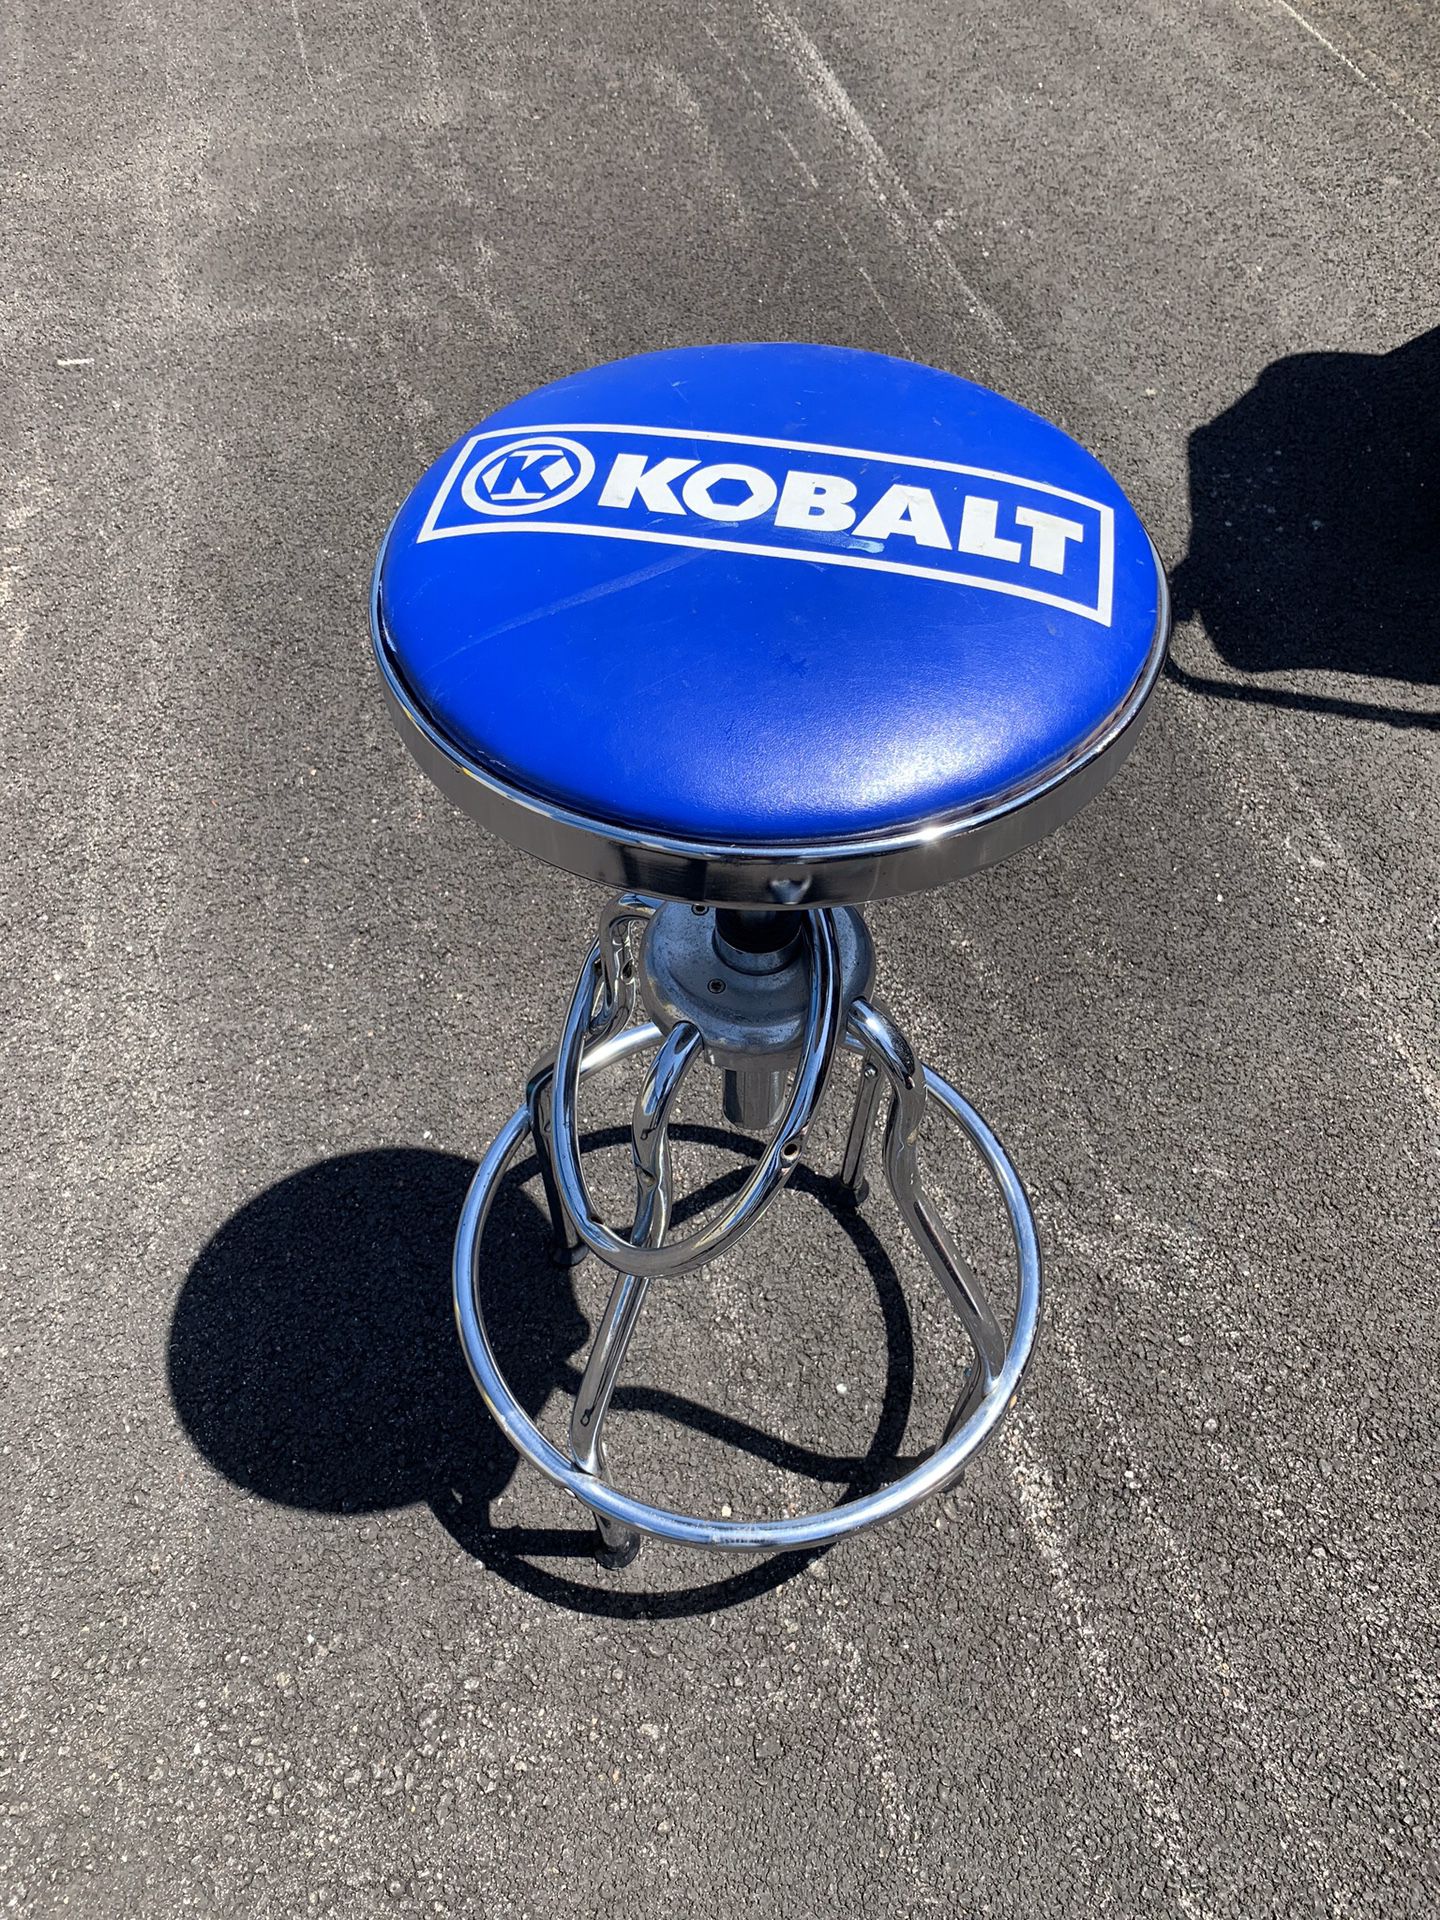 Kobalt Adjustable Hydraulic Stool Mechanic Seat Chair Work Shop Garage Bench sit used $45.